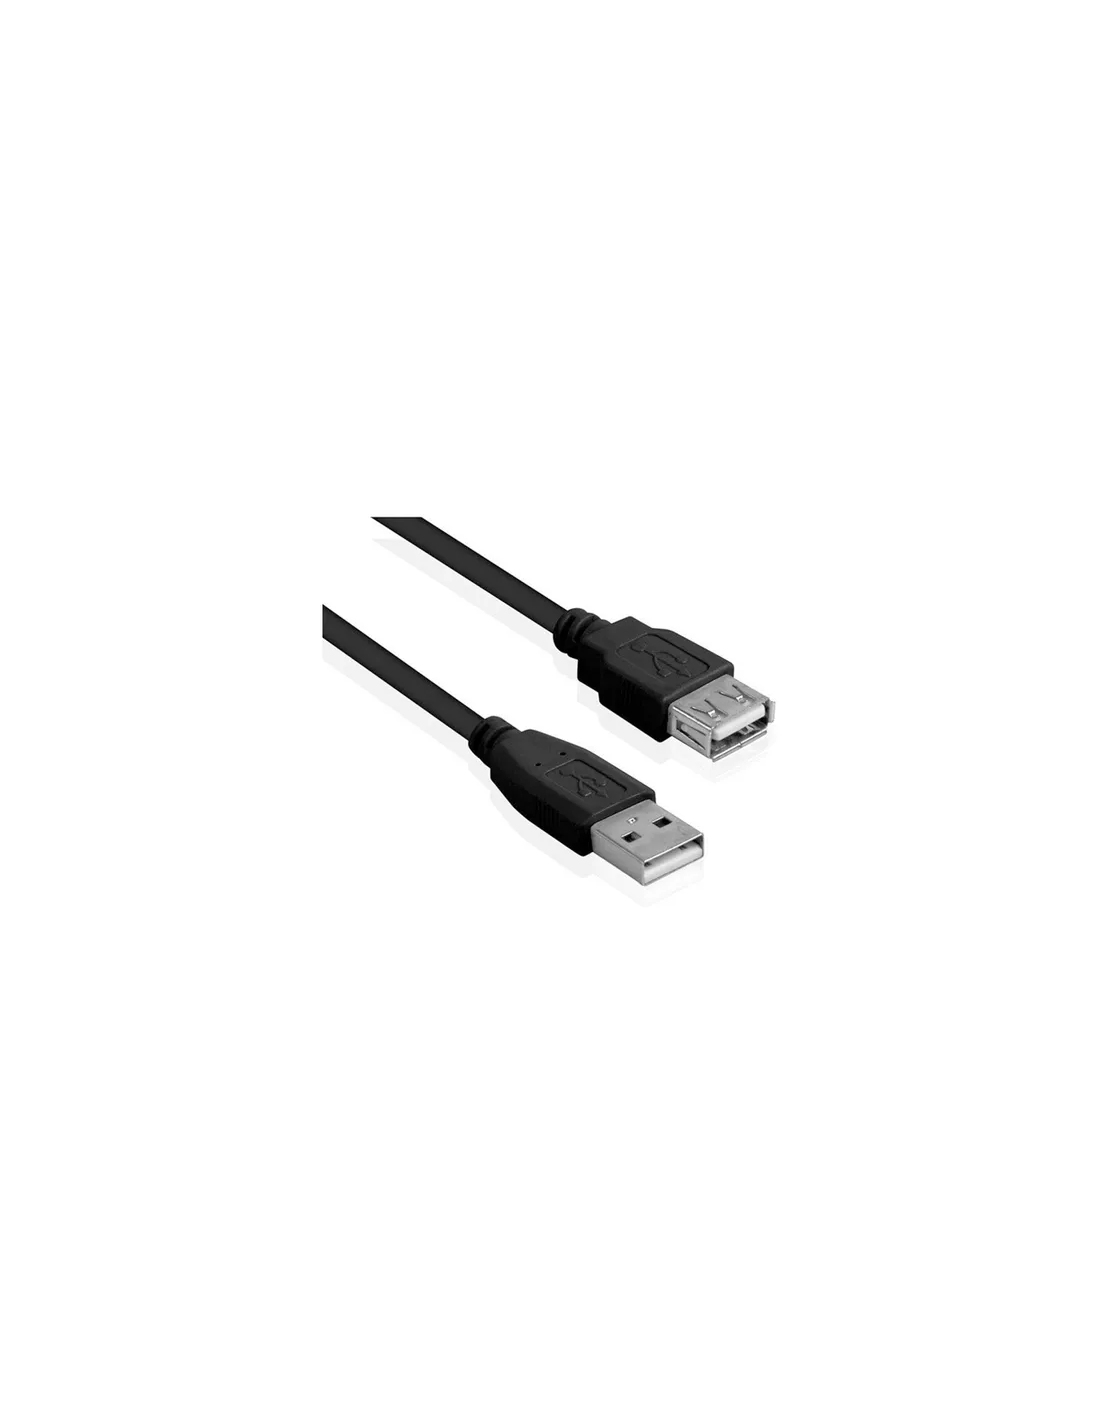 Cable Extensión Usb 2.0 Macho Hembra 1.8 Mts